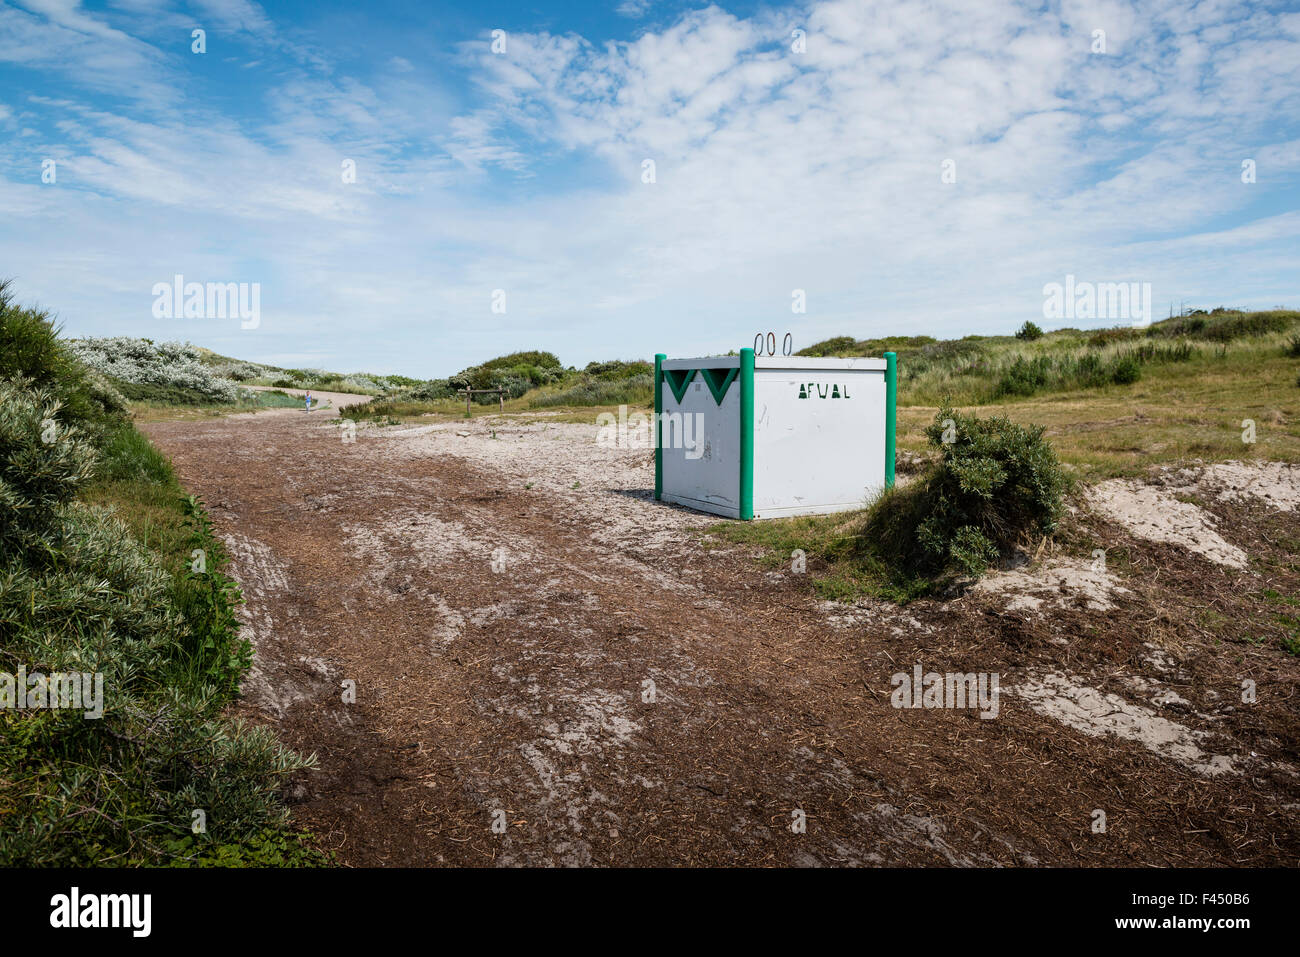 3 Luglio, 2014 la garbage collection point nelle dune per la spiaggia del mare del Nord a Kaap Hoorn. Foto Kees Metselaar Foto Stock